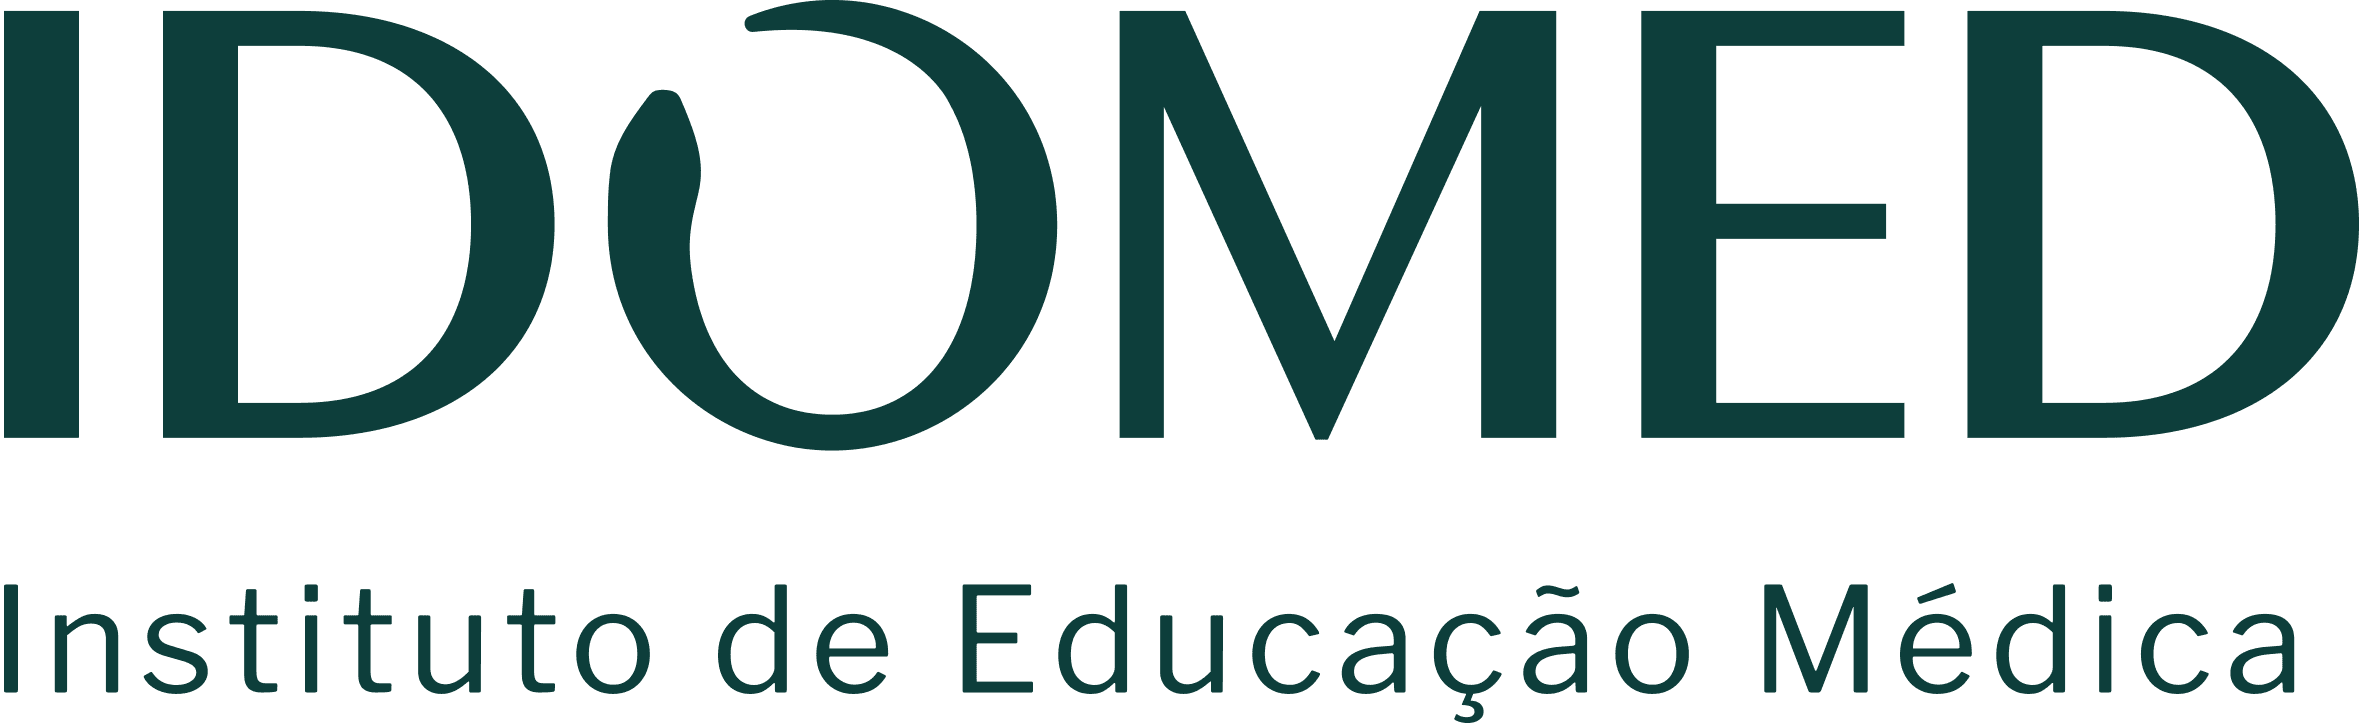 logomarca do IDOMED